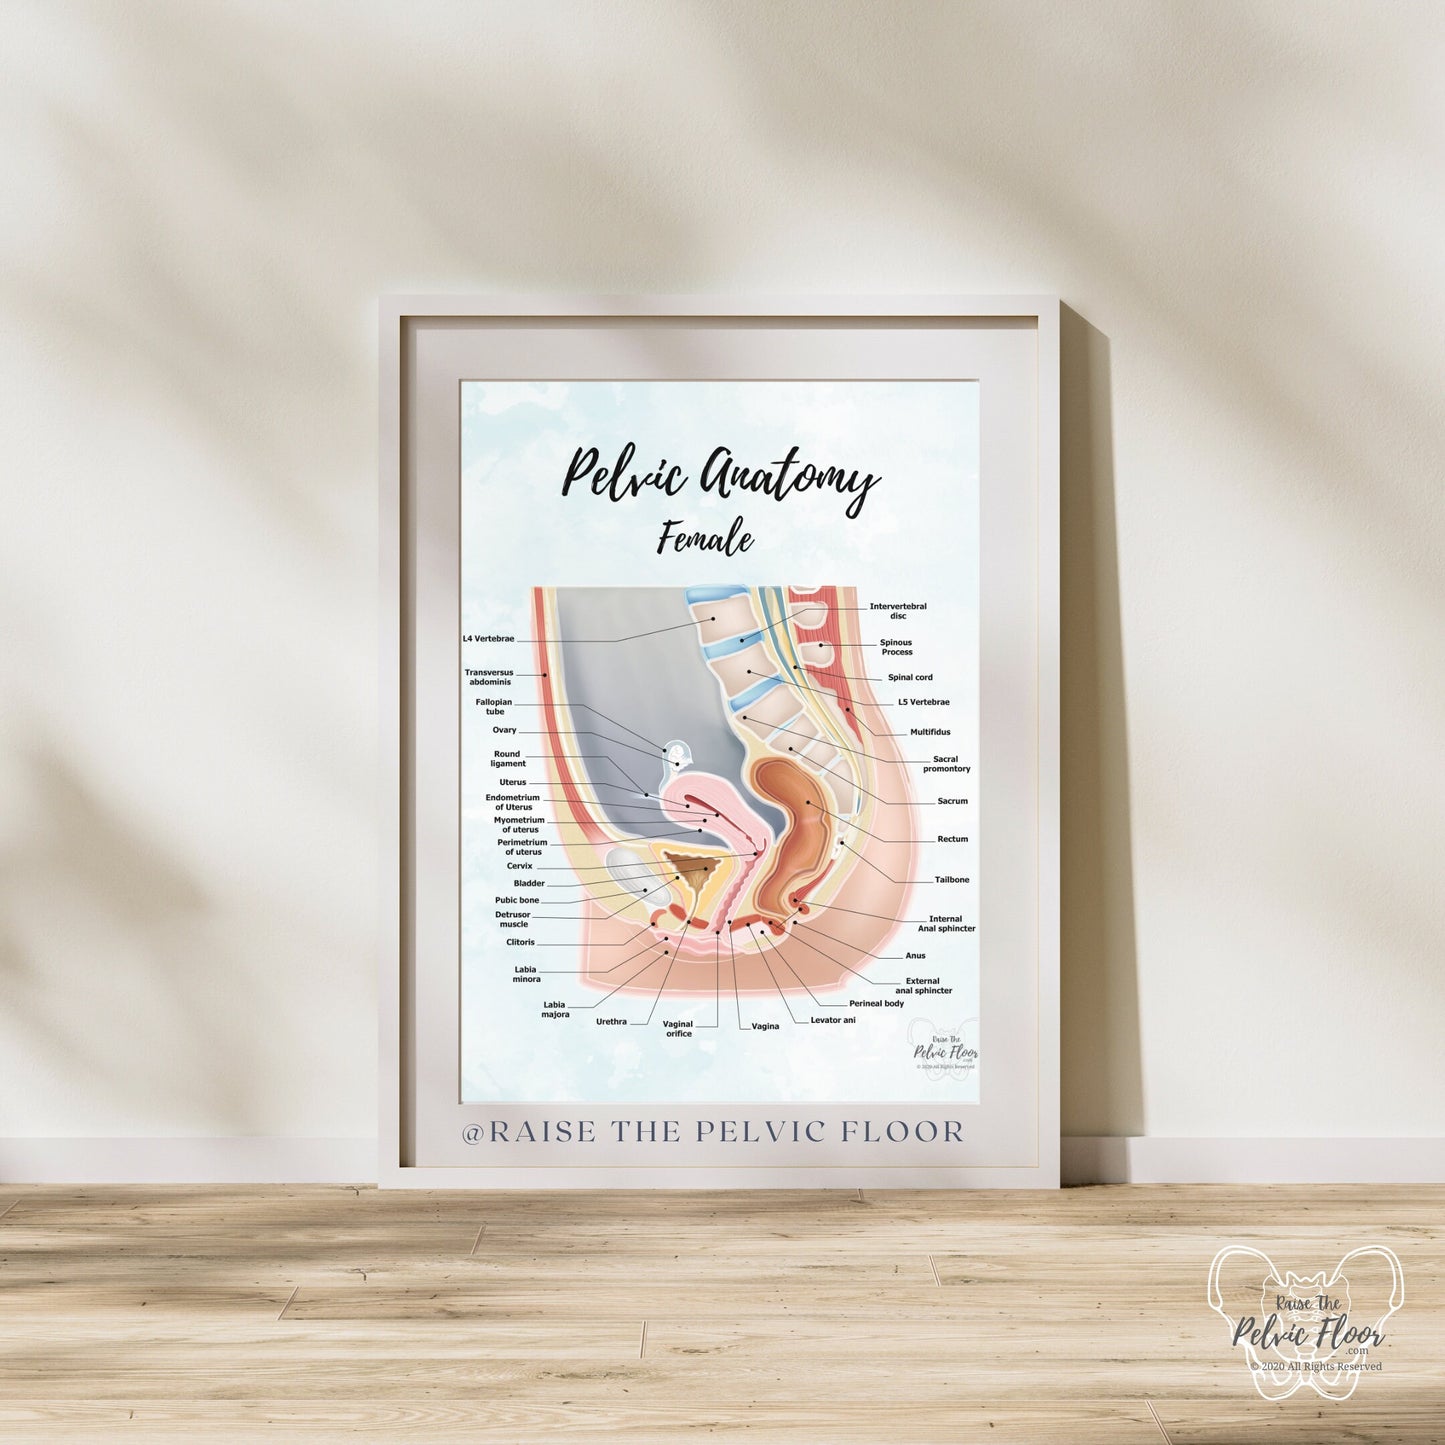 Female Pelvic Anatomy Poster Art | Sagittal/ Side view | Vagina, Uterus, Rectum, Pelvic Floor Anatomy